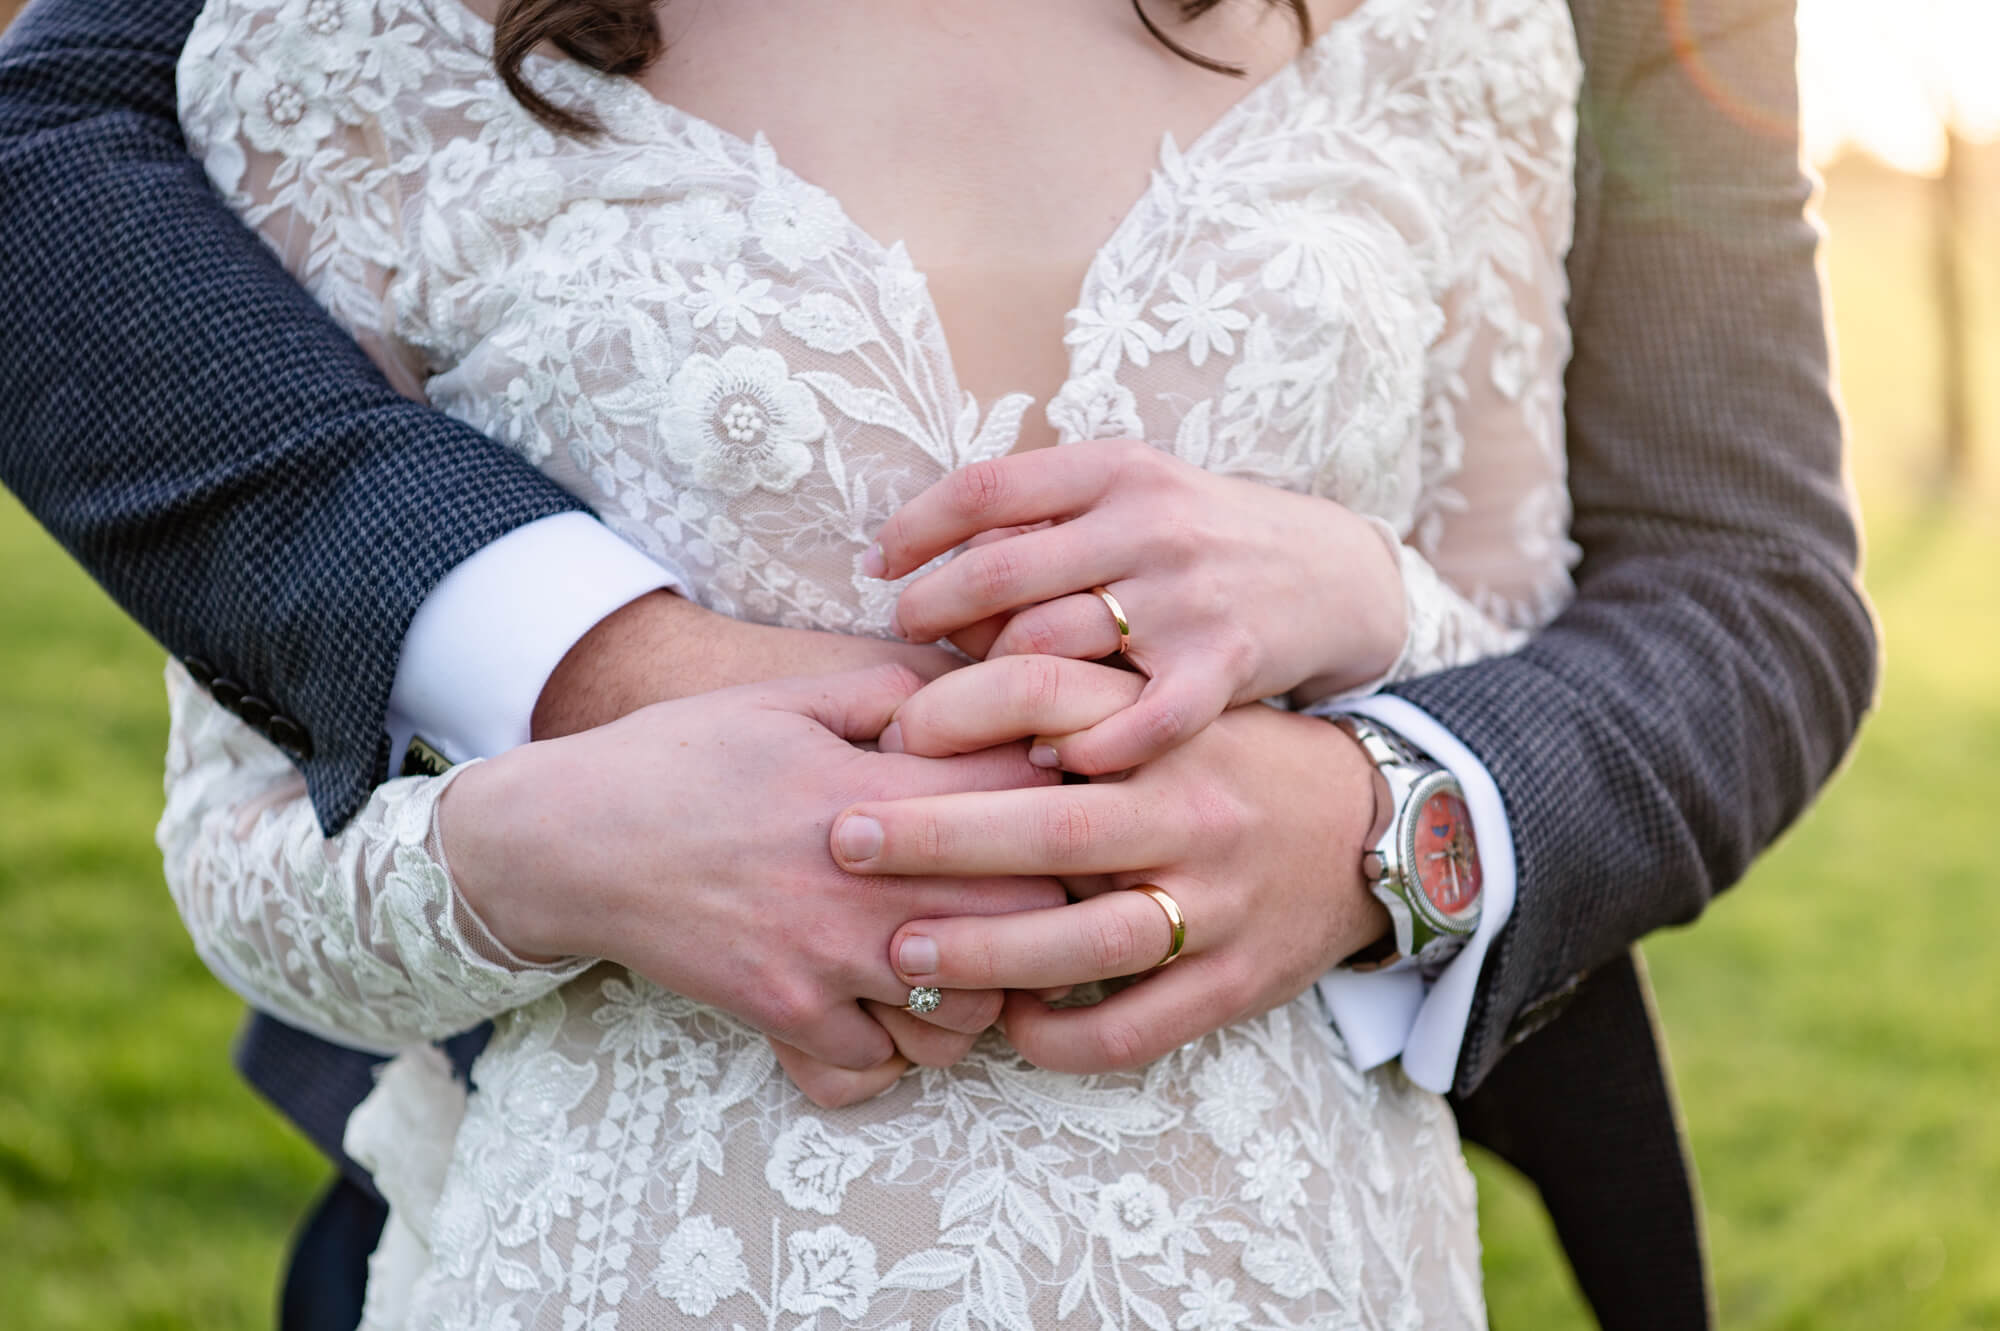 Milton Keynes Wedding Photographer Chloe Bolam - Furtho Manor Farm Wedding - Couple Portrait - Rings